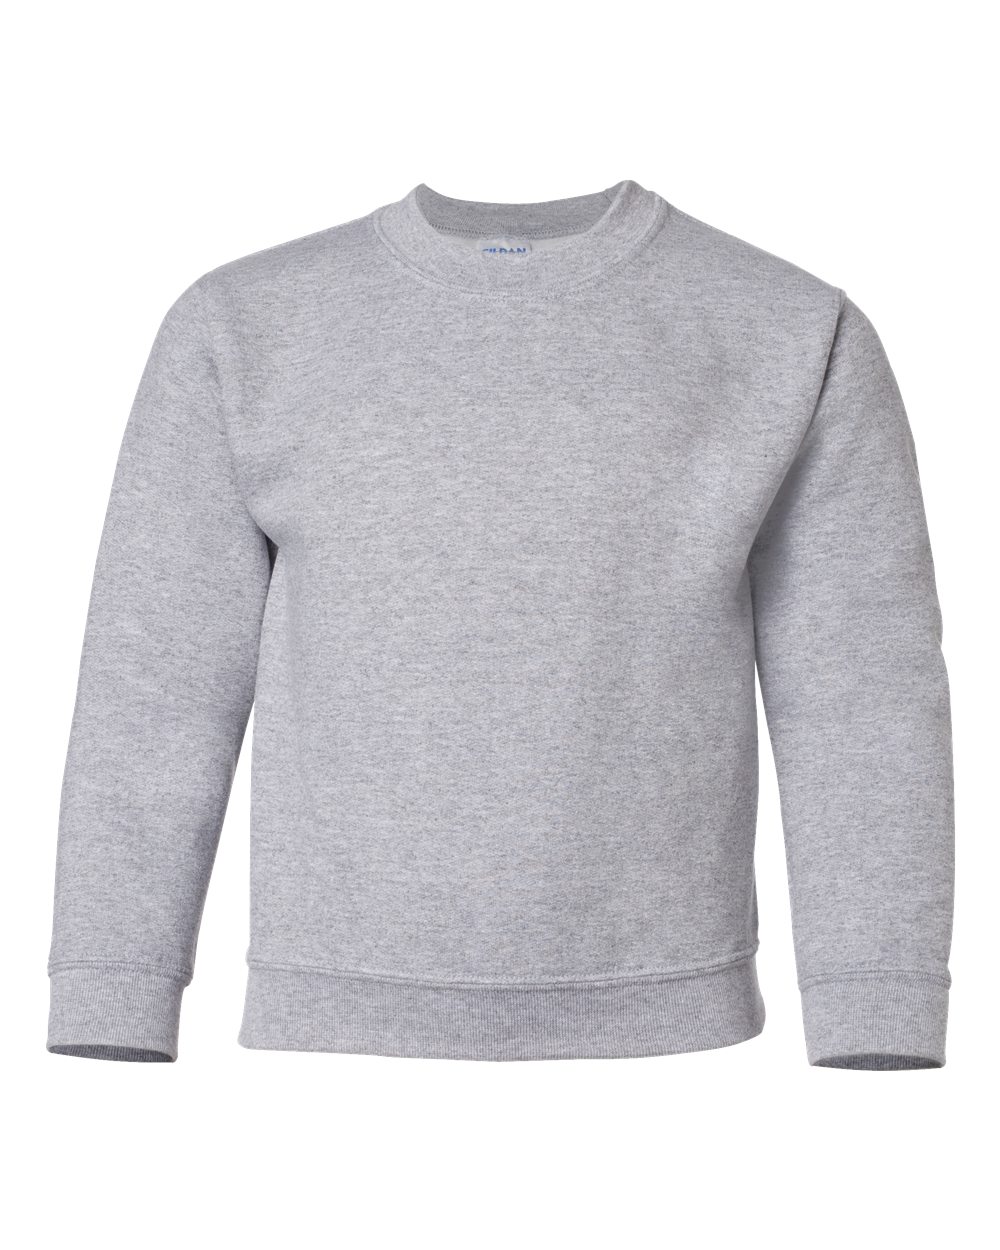 Gildan Youth Crewneck Sweatshirt (18000b) in Sport Grey